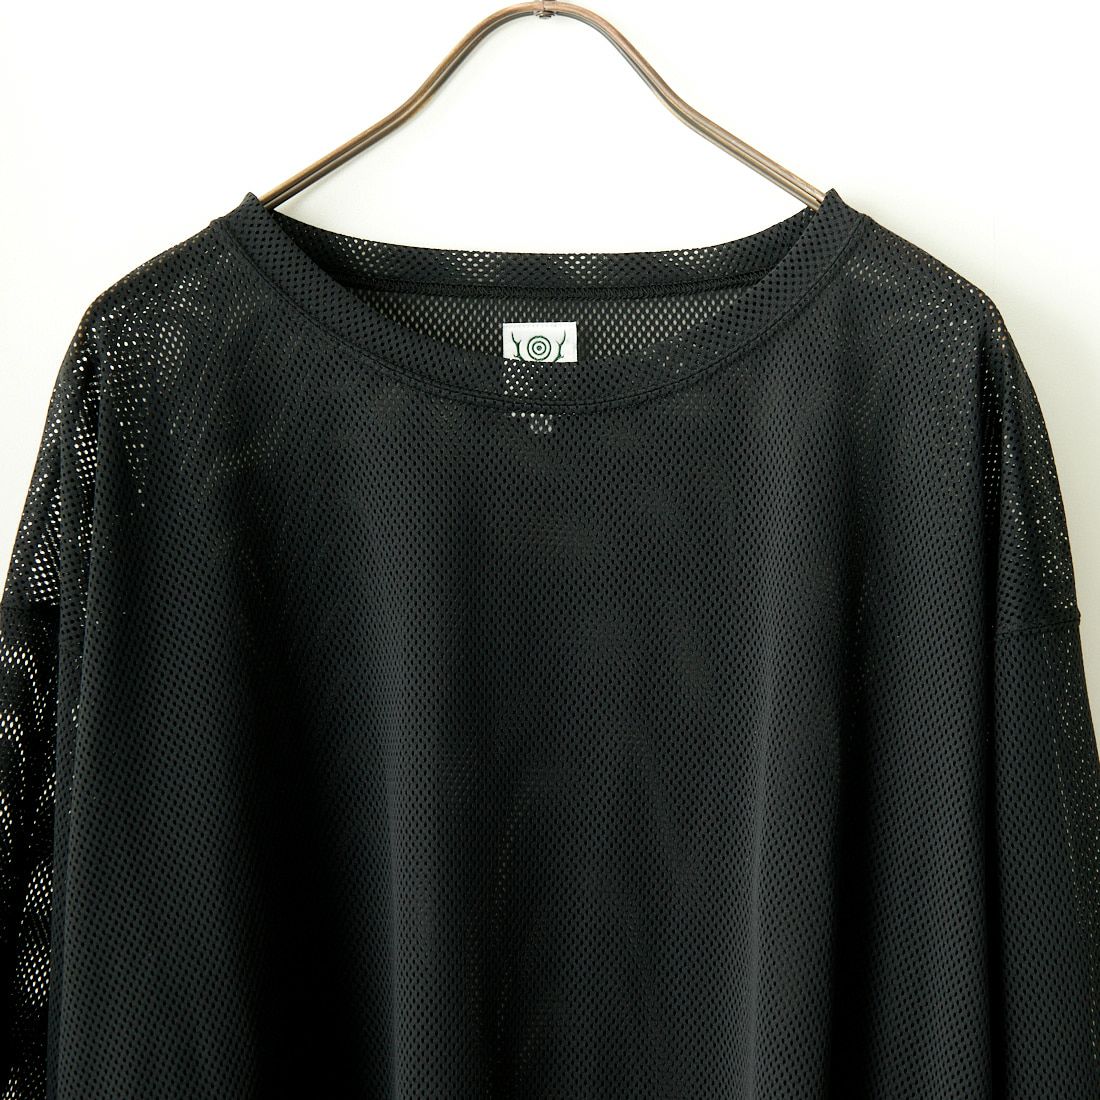 South2West8 [サウスツーウエストエイト] メッシュクルーネックシャツ [OT608] D BLACK